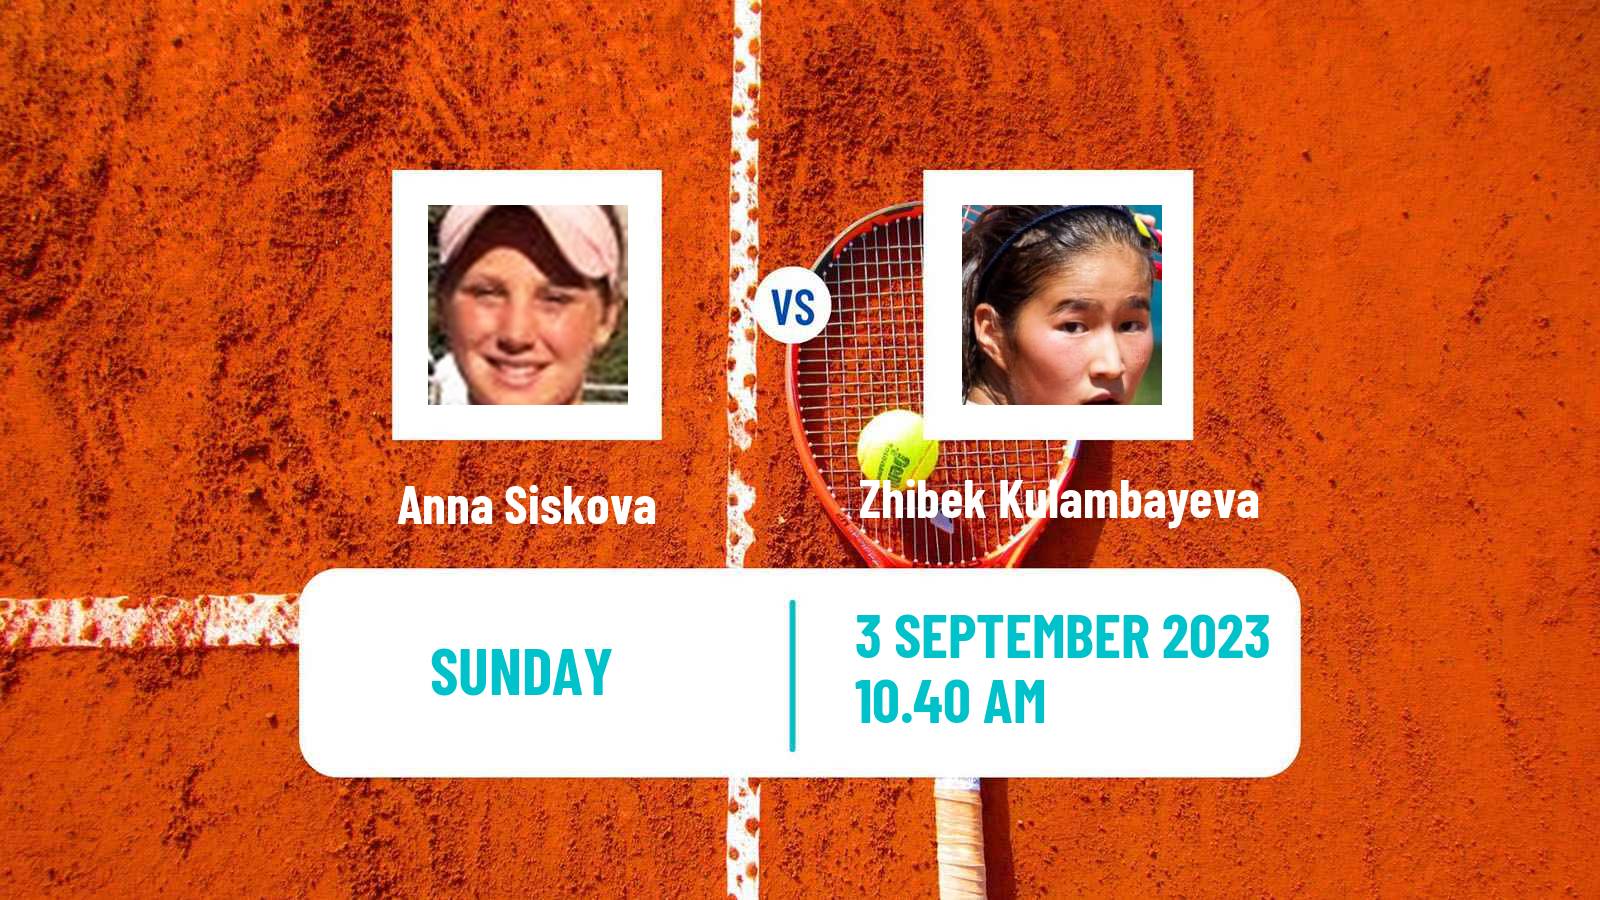 Tennis Bari Challenger Women Anna Siskova - Zhibek Kulambayeva